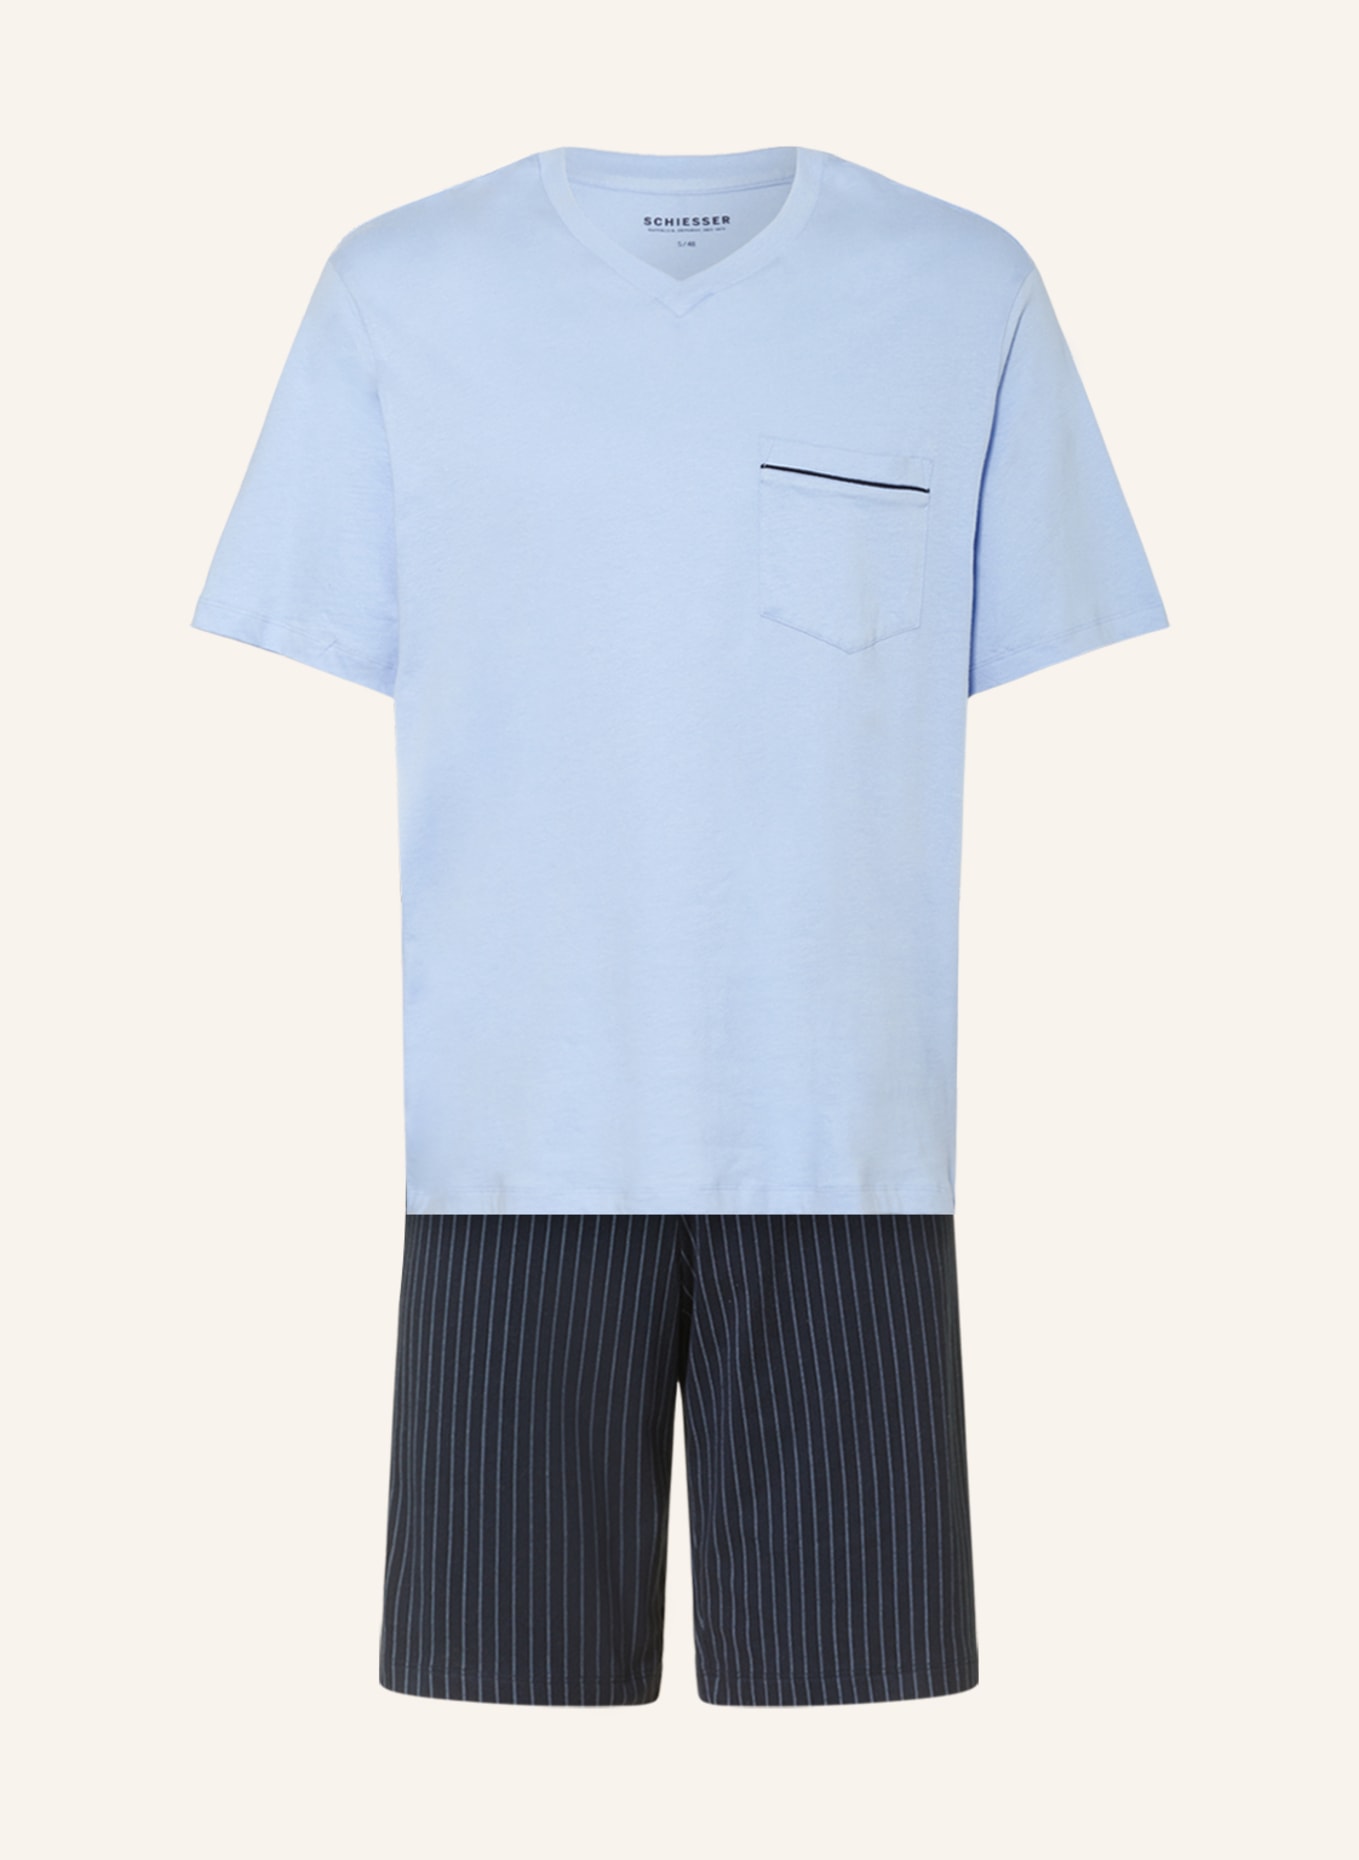 Shorty SCHIESSER FIT dark pajamas COMFORT in blue/ blue light